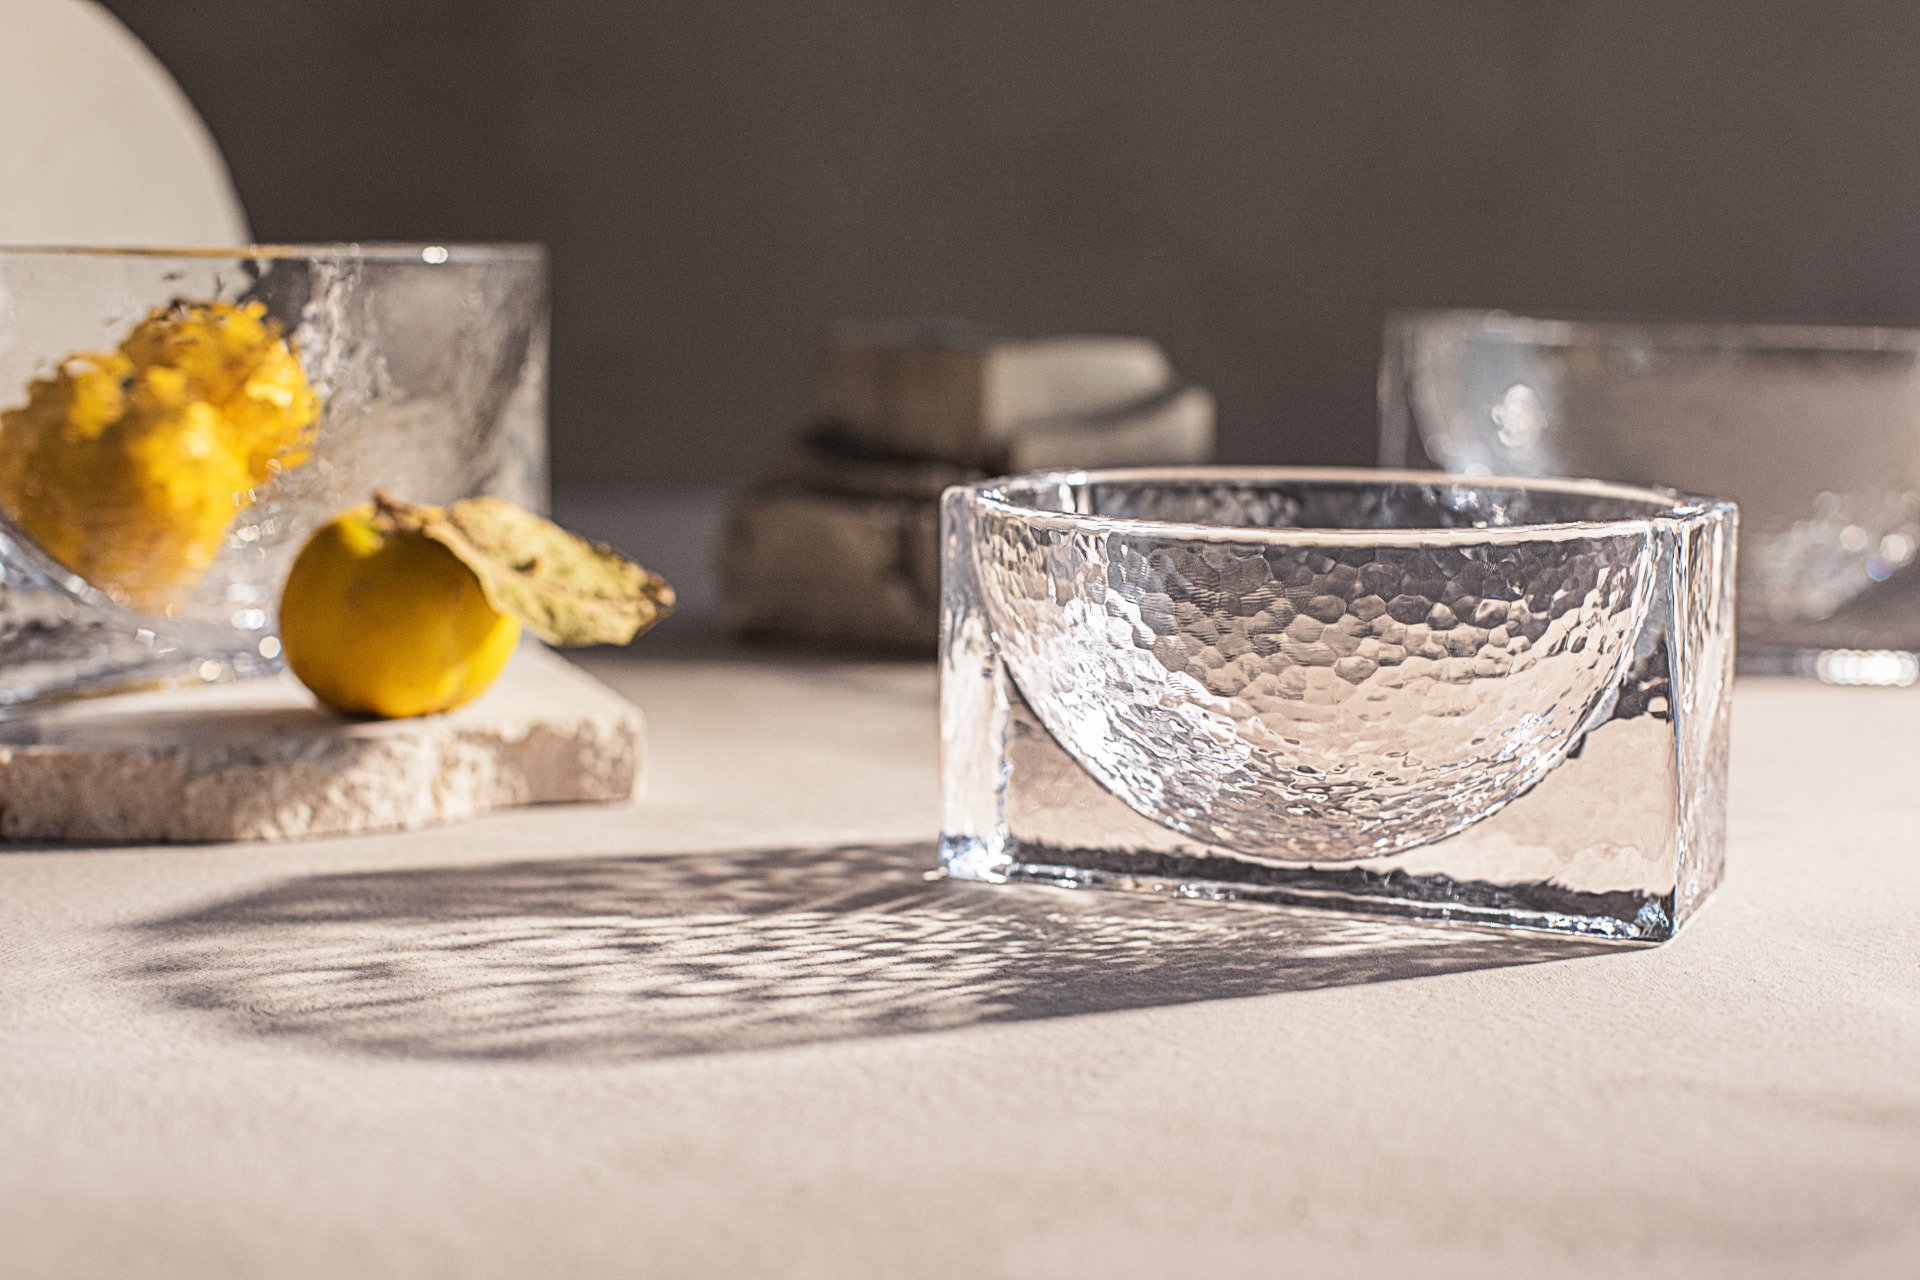 Glassvaser i serien Forma fra Holmegaard, designet av Linnea Blæhr og Laura Bilde. Nominert til Årets design under Design Awards 2021